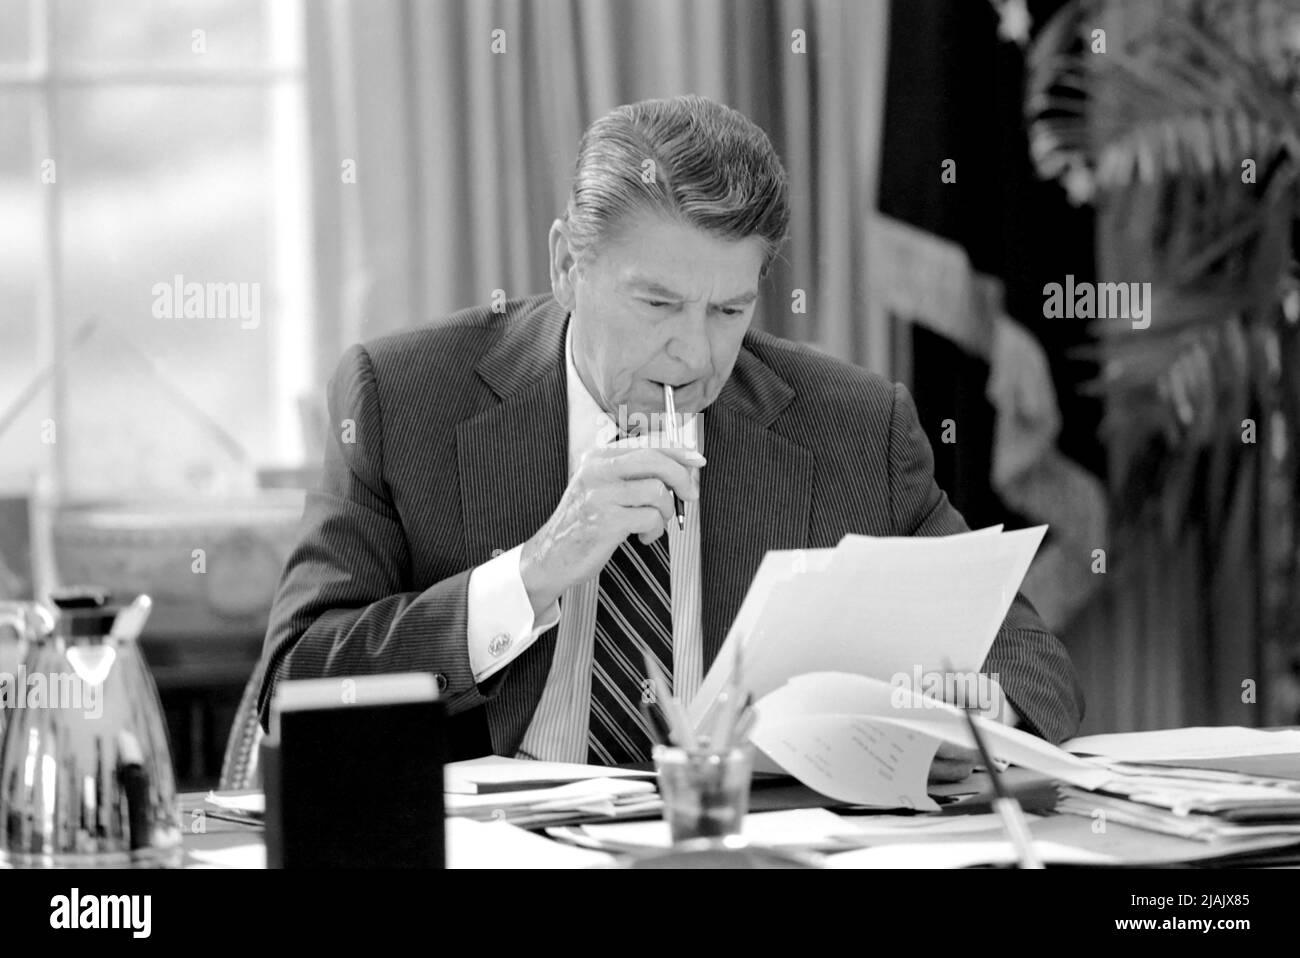 President Ronald Reagan in the White House Stock Photo